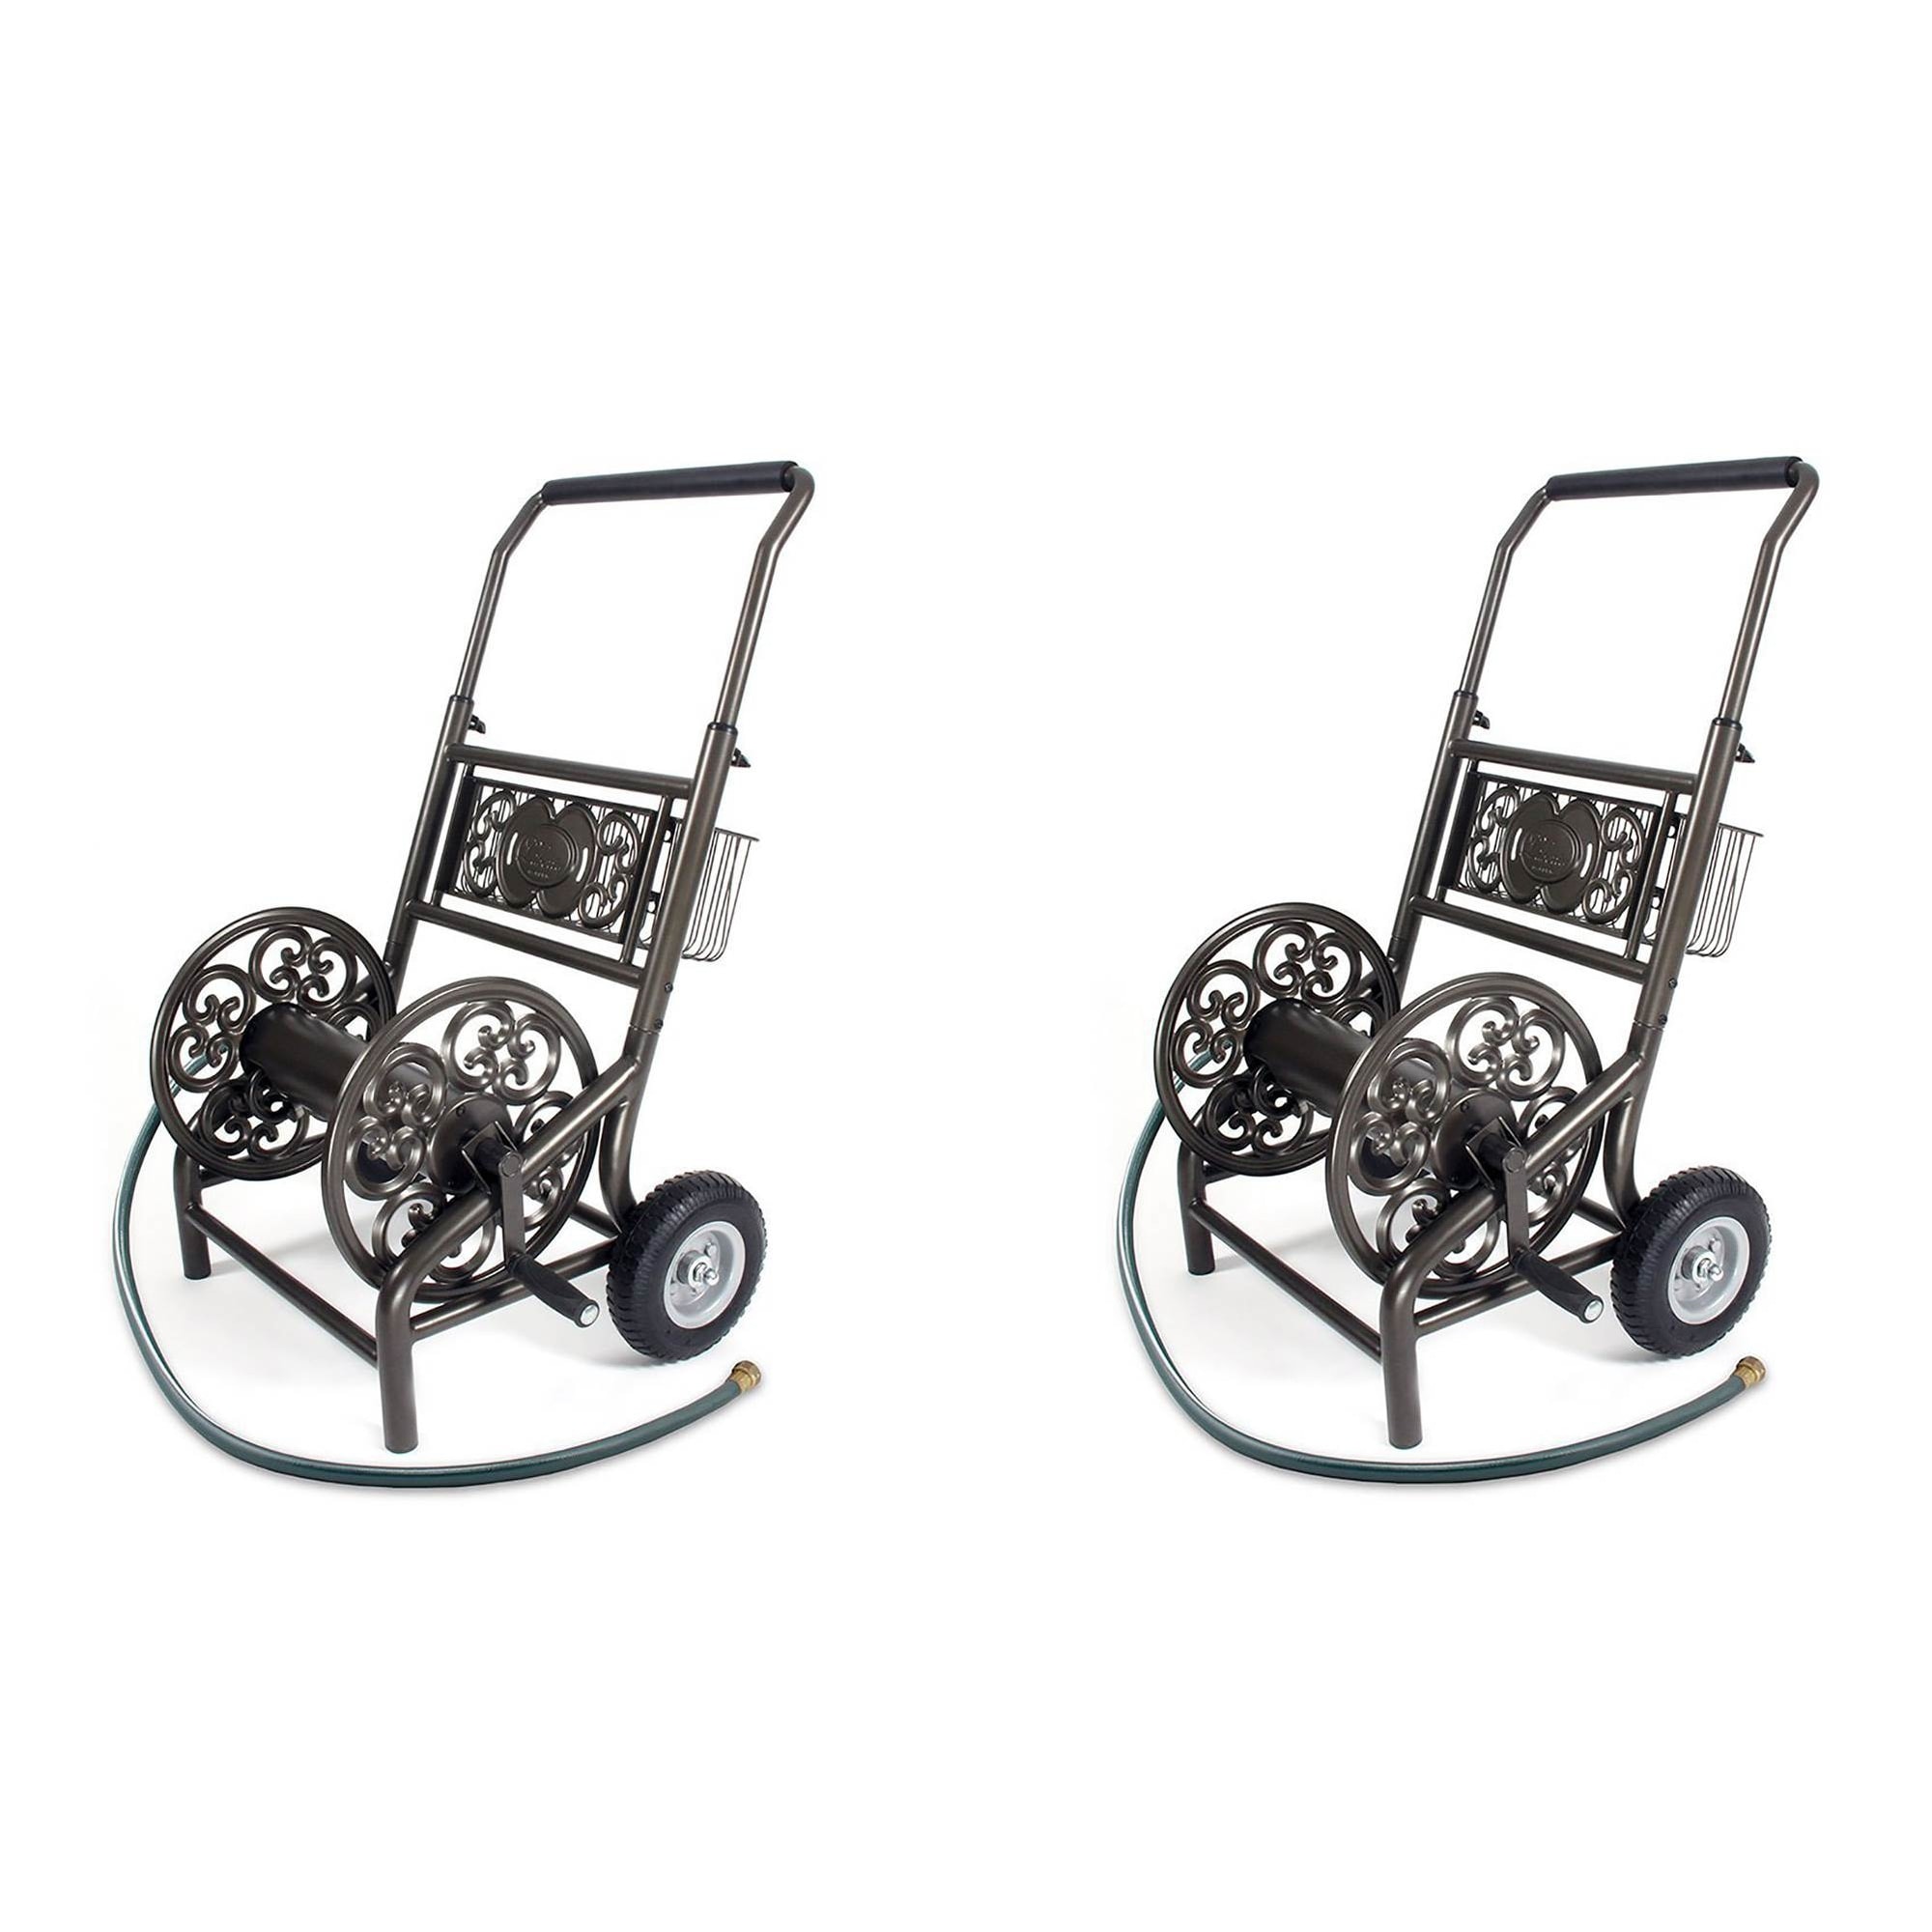 garden hose reel/cart on wheels - WITH 100FT GARDEN HOSE- fold down handle